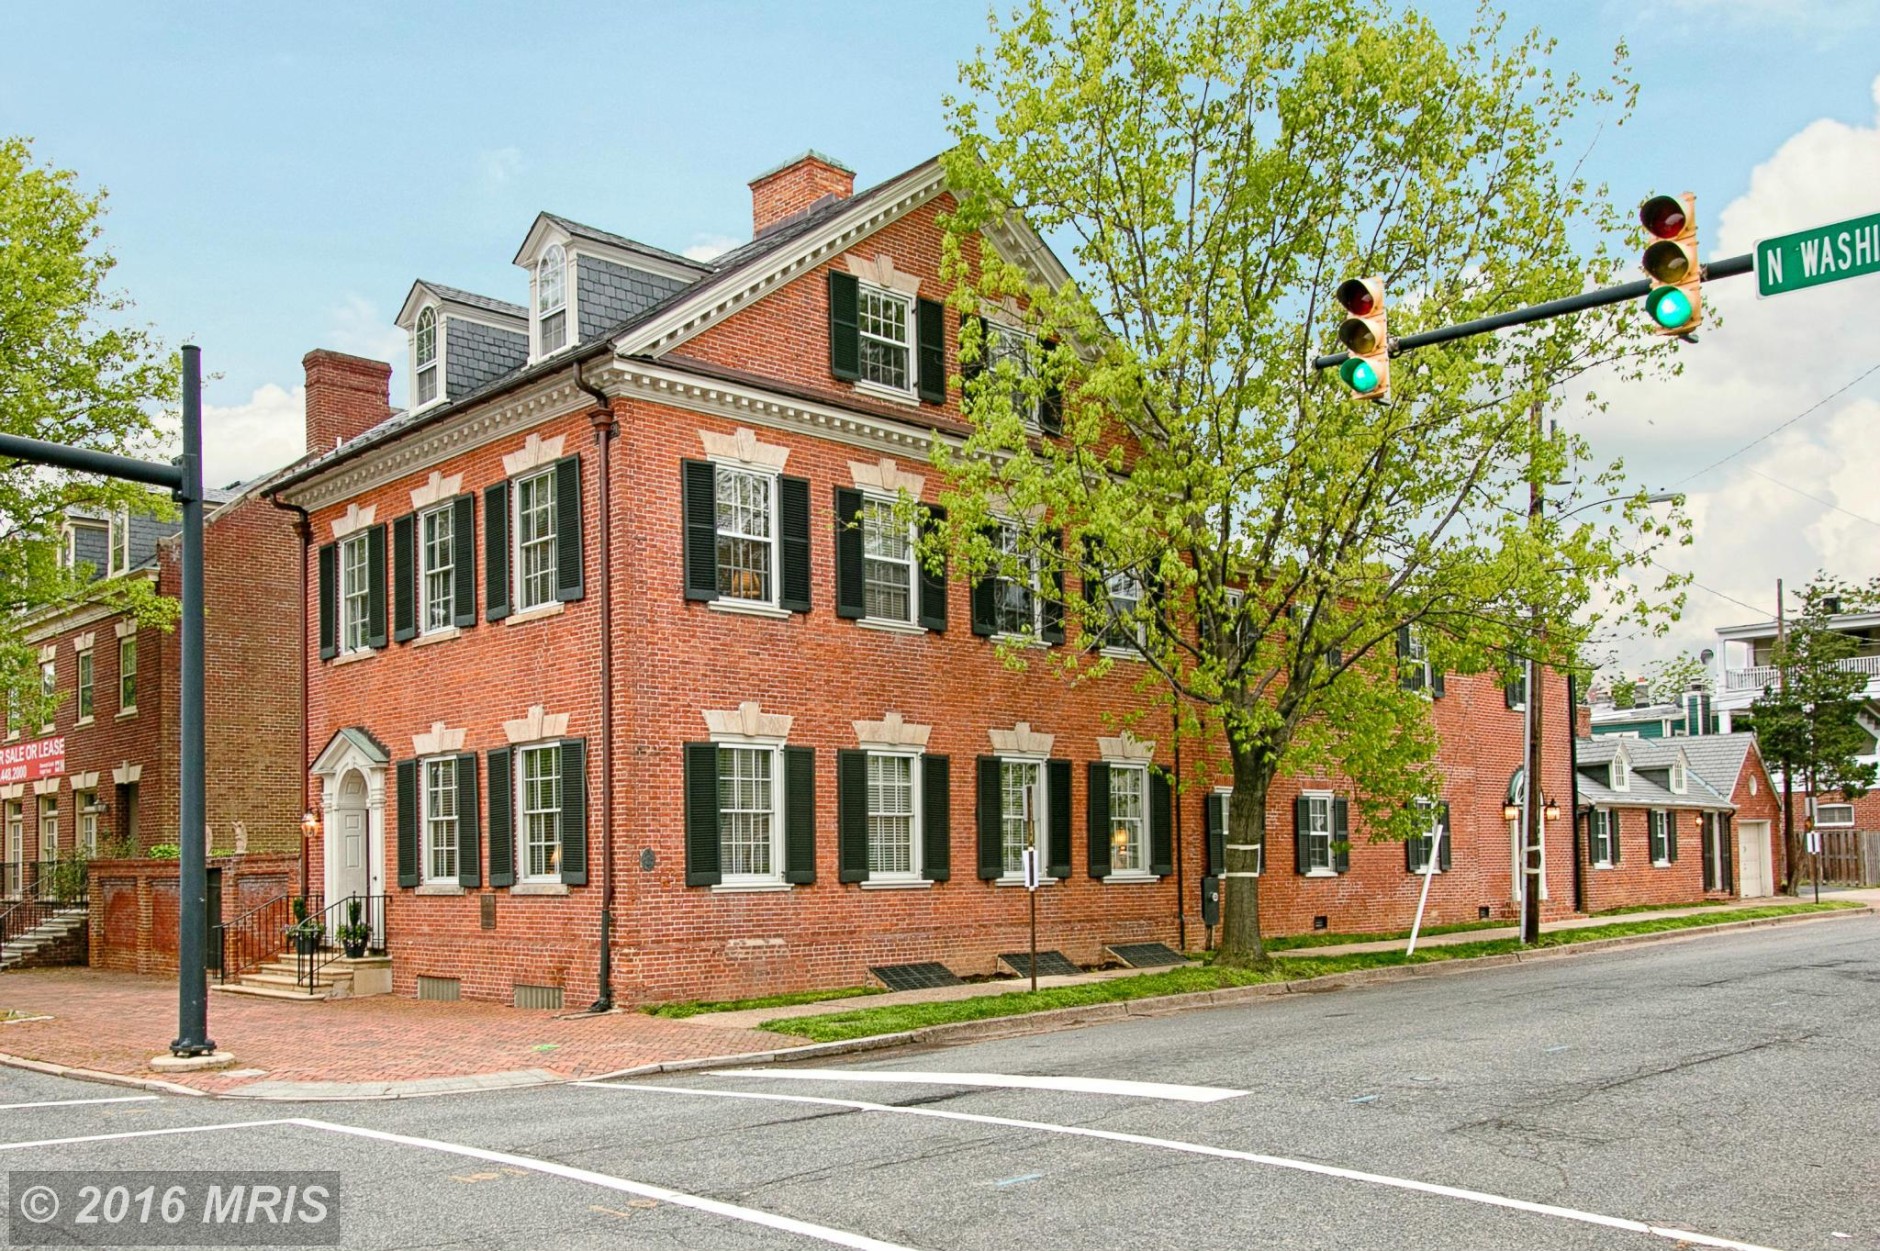 15. $2,675,000
428 N. Washington St., Alexandria, Virginia
This 1801 Colonial has four bedrooms, six bathrooms and a half-bath. (MRIS)